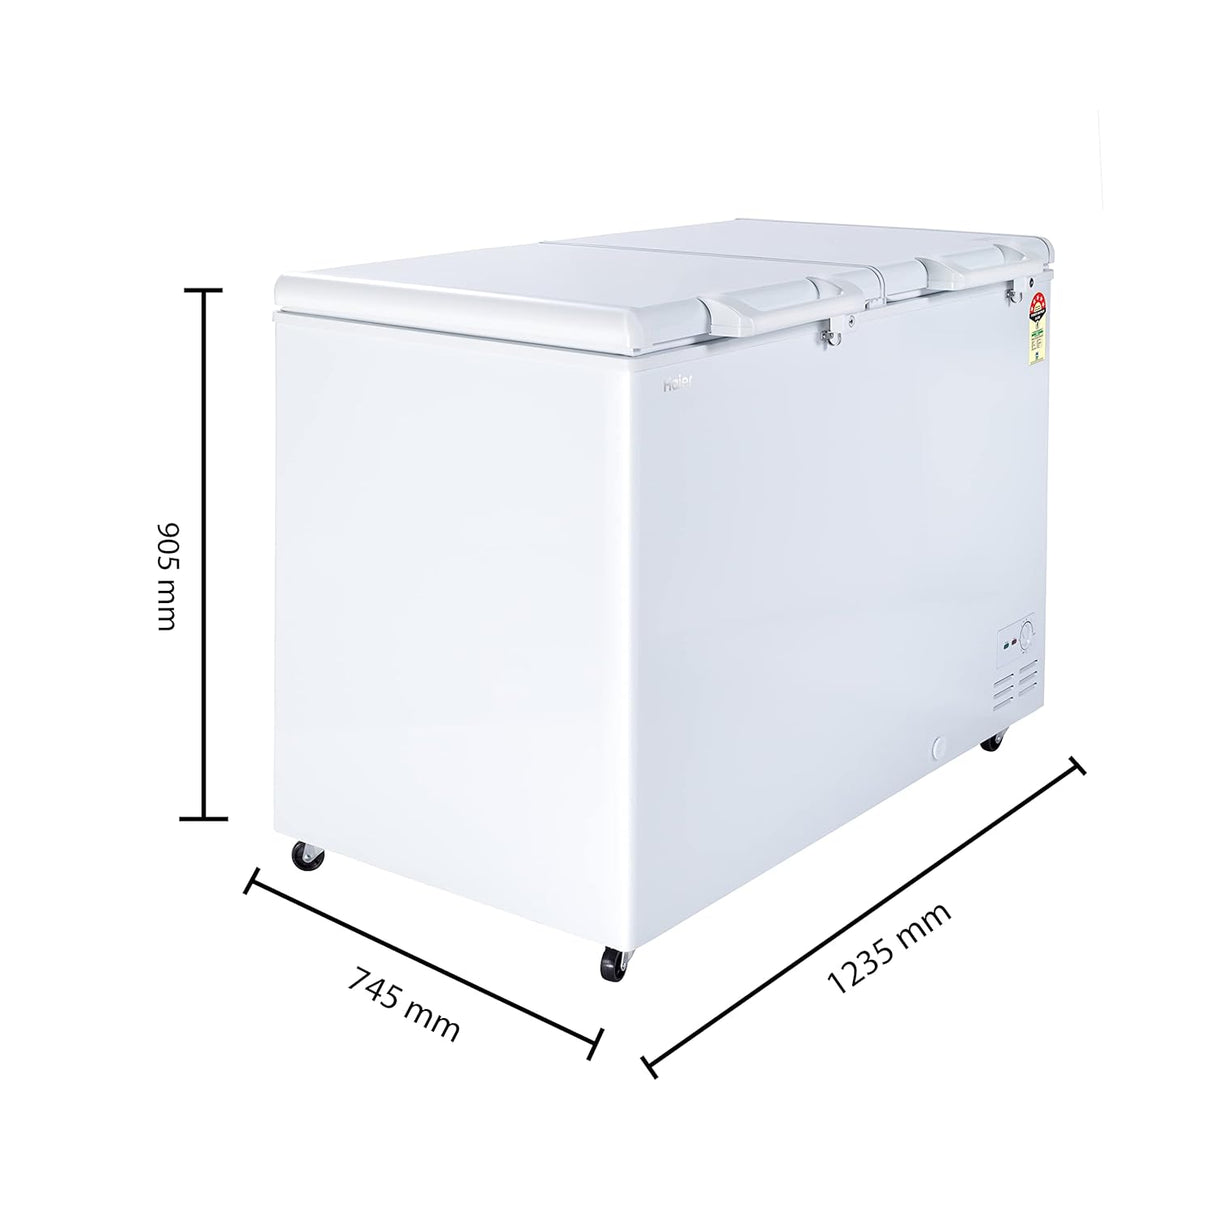 Freezer - Haier HFC-400DM5, a double door deep freezer.